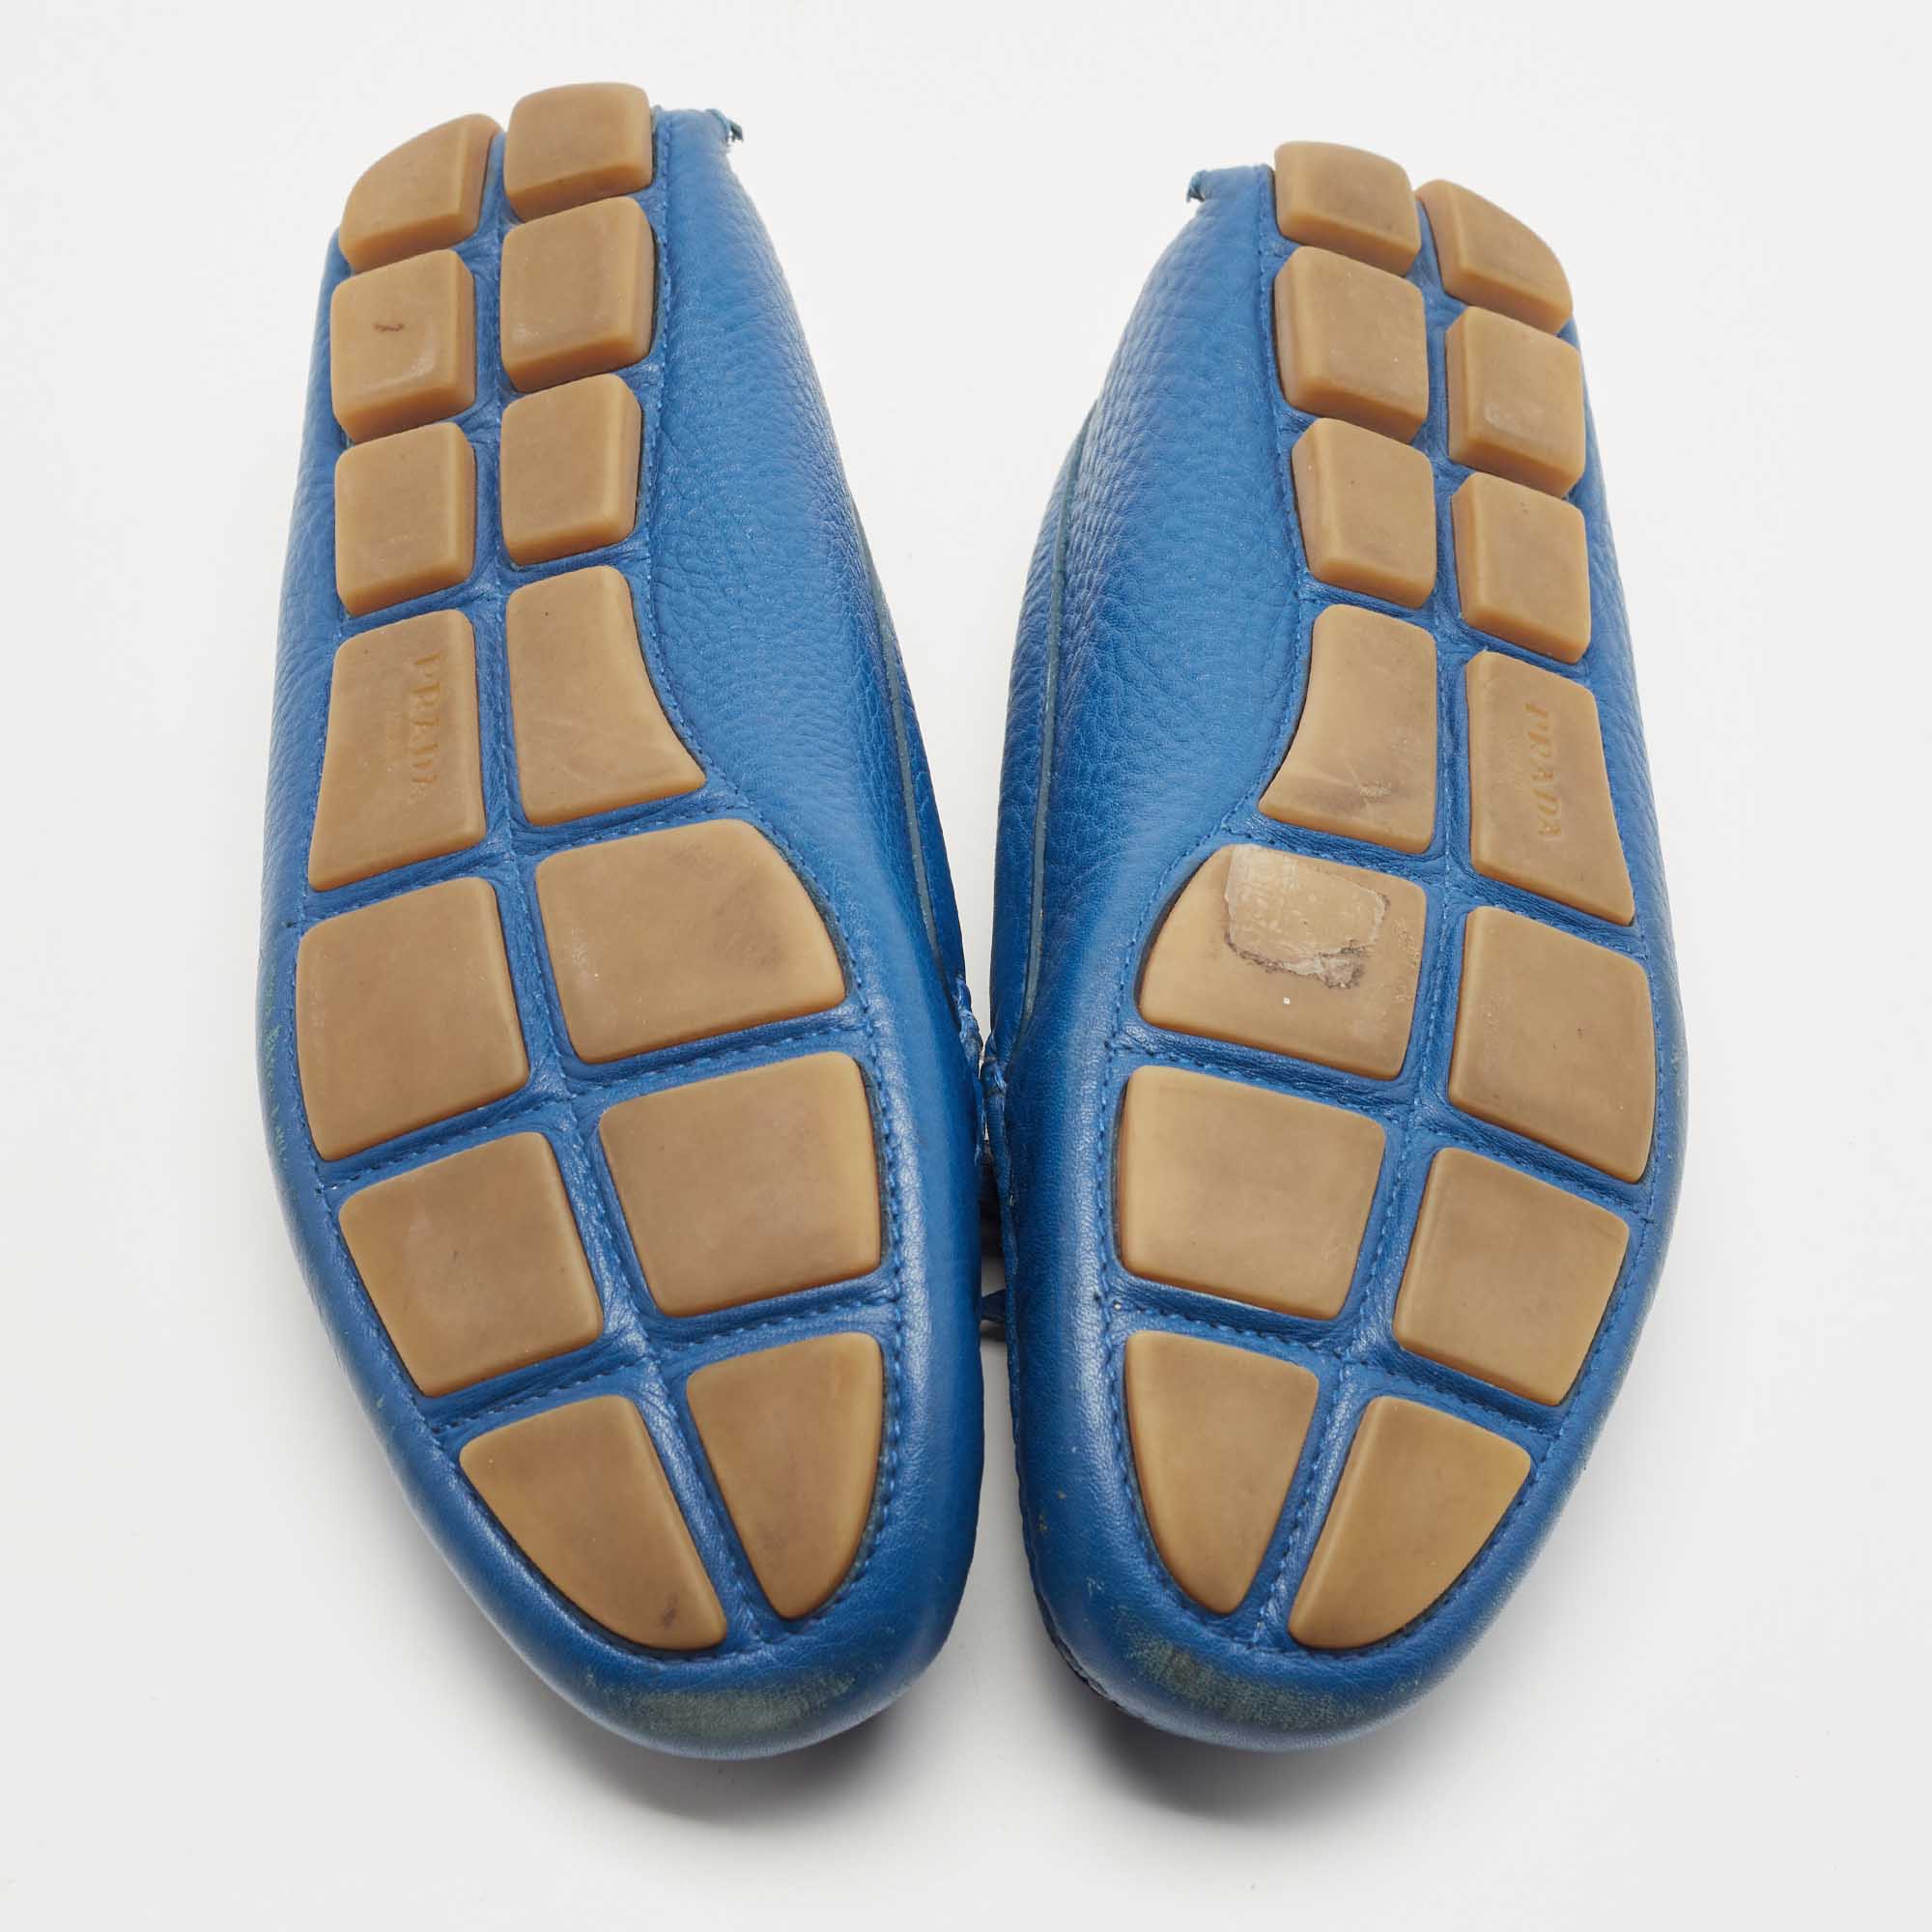 Prada Blue Leather Slip On Loafers Size 38